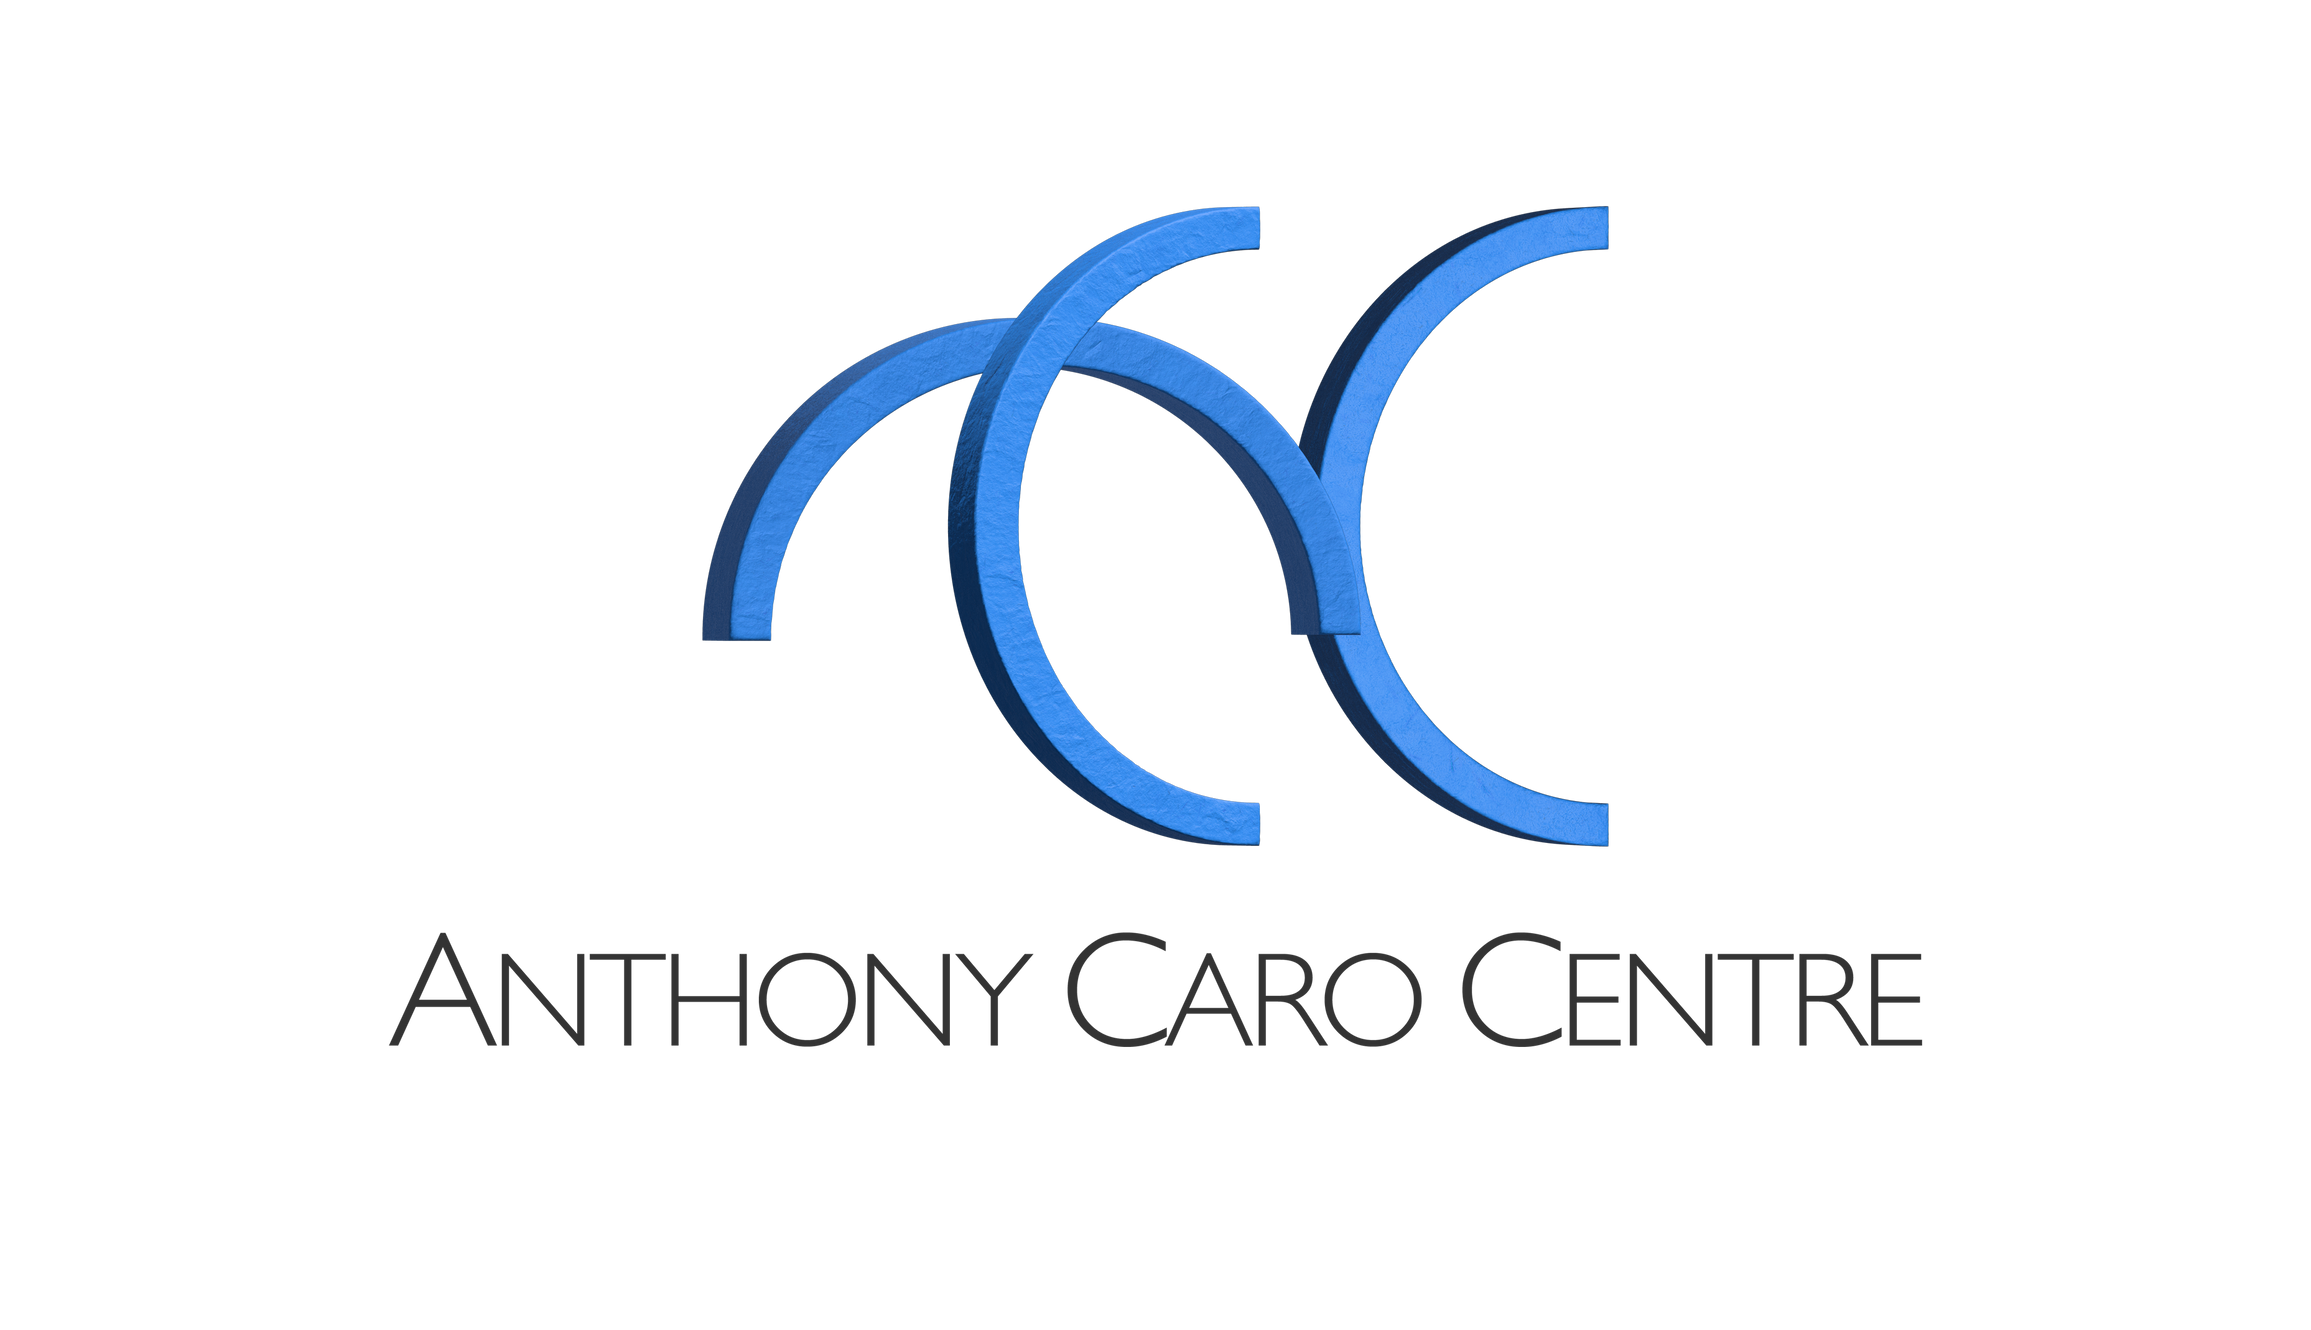 The Anthony Caro Centre